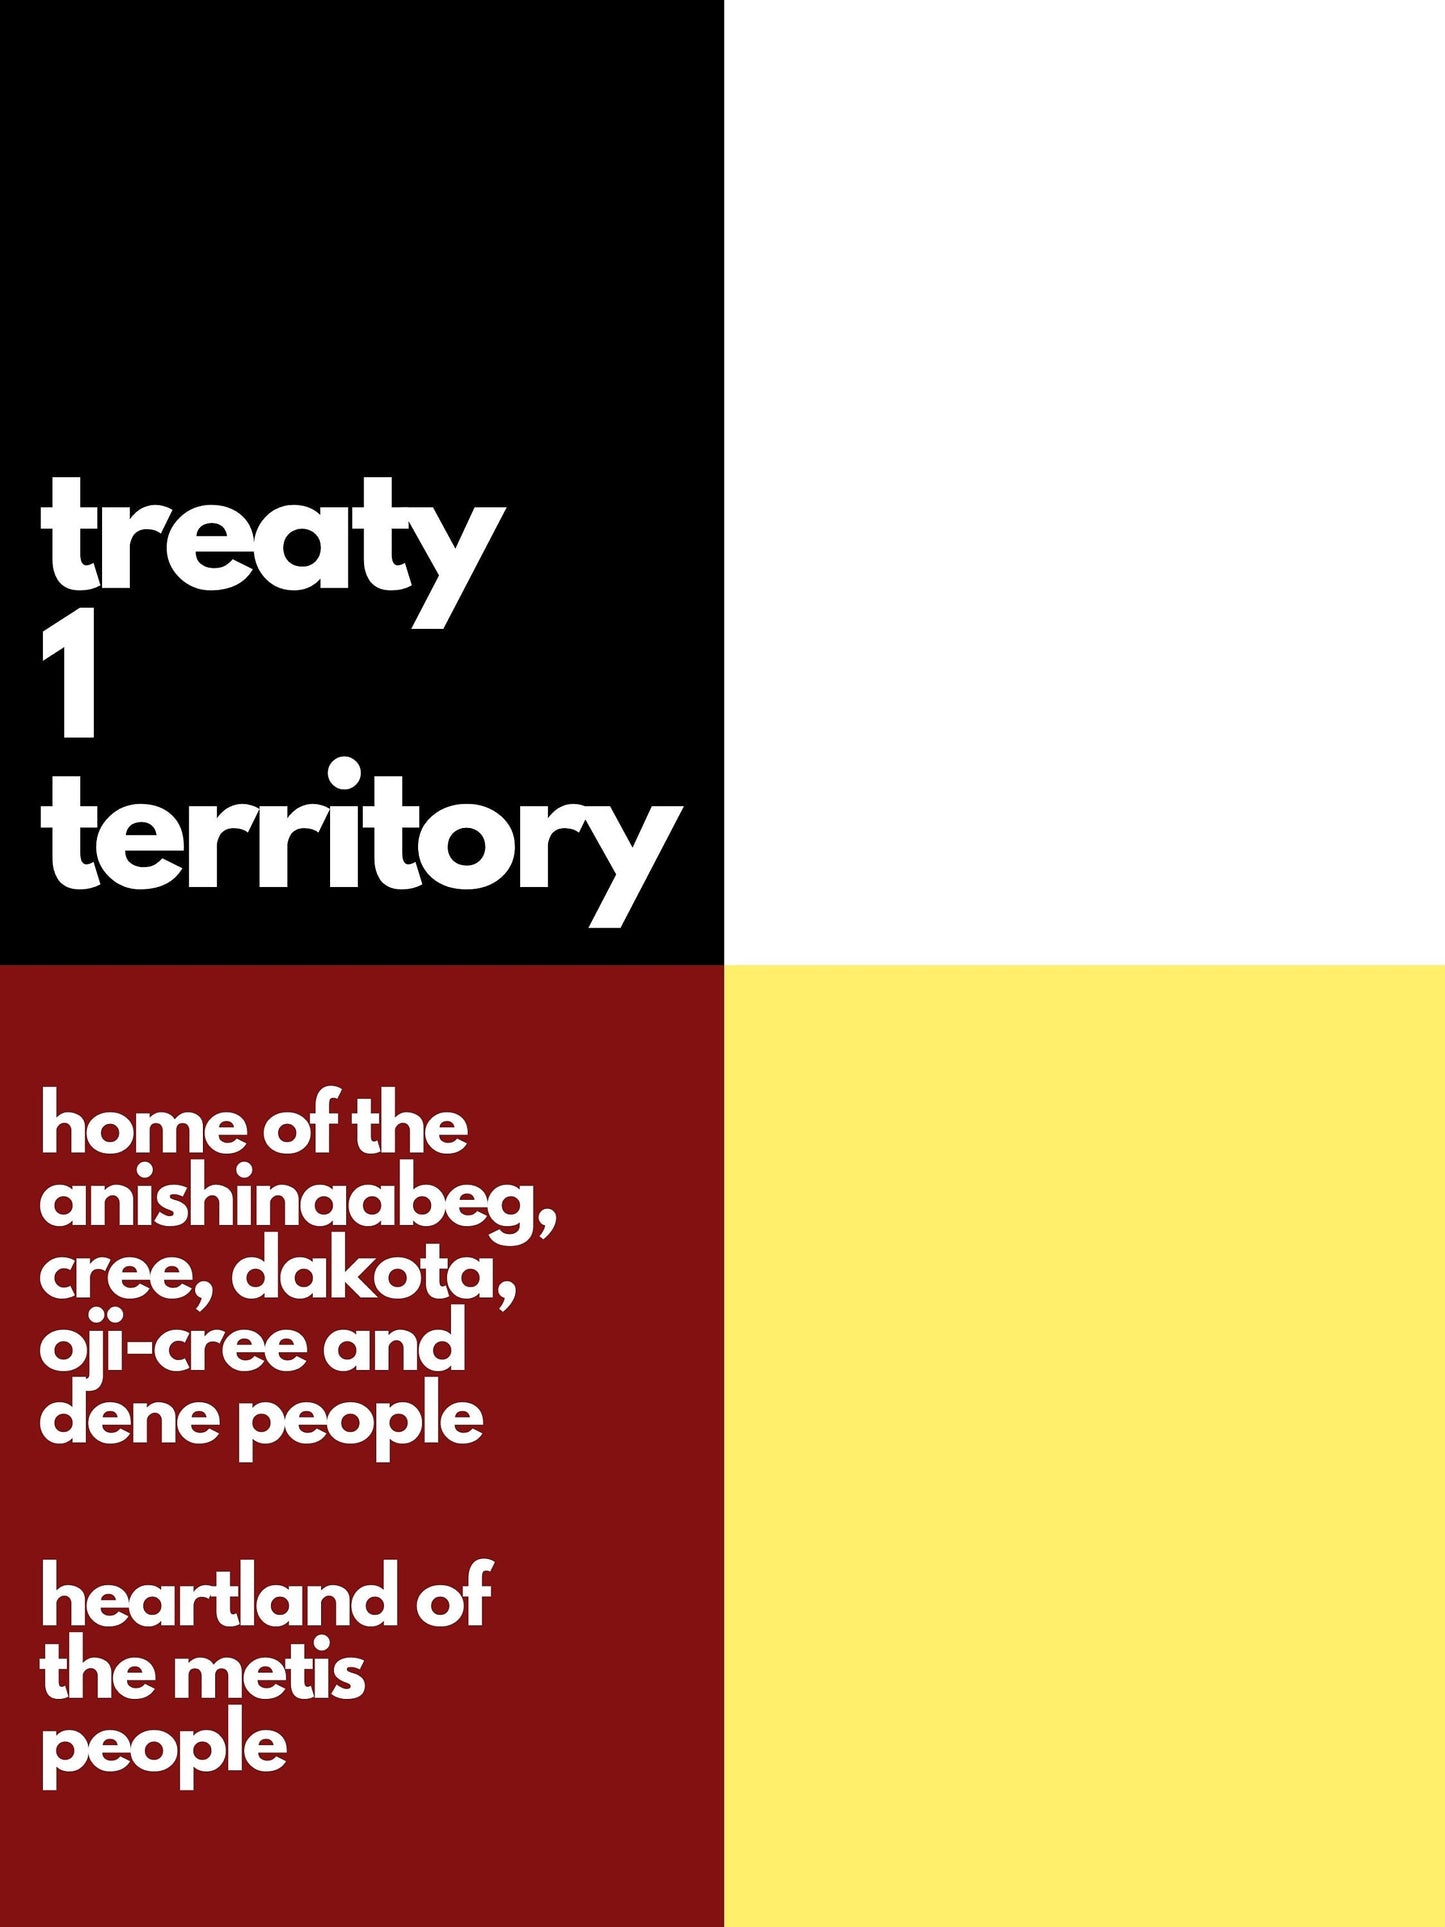 Land Acknowledgement Art Print - Treaty 1 Territory - Ojibwe, Cree, Dakota, Dene, Oji-Cree, Dene, Metis